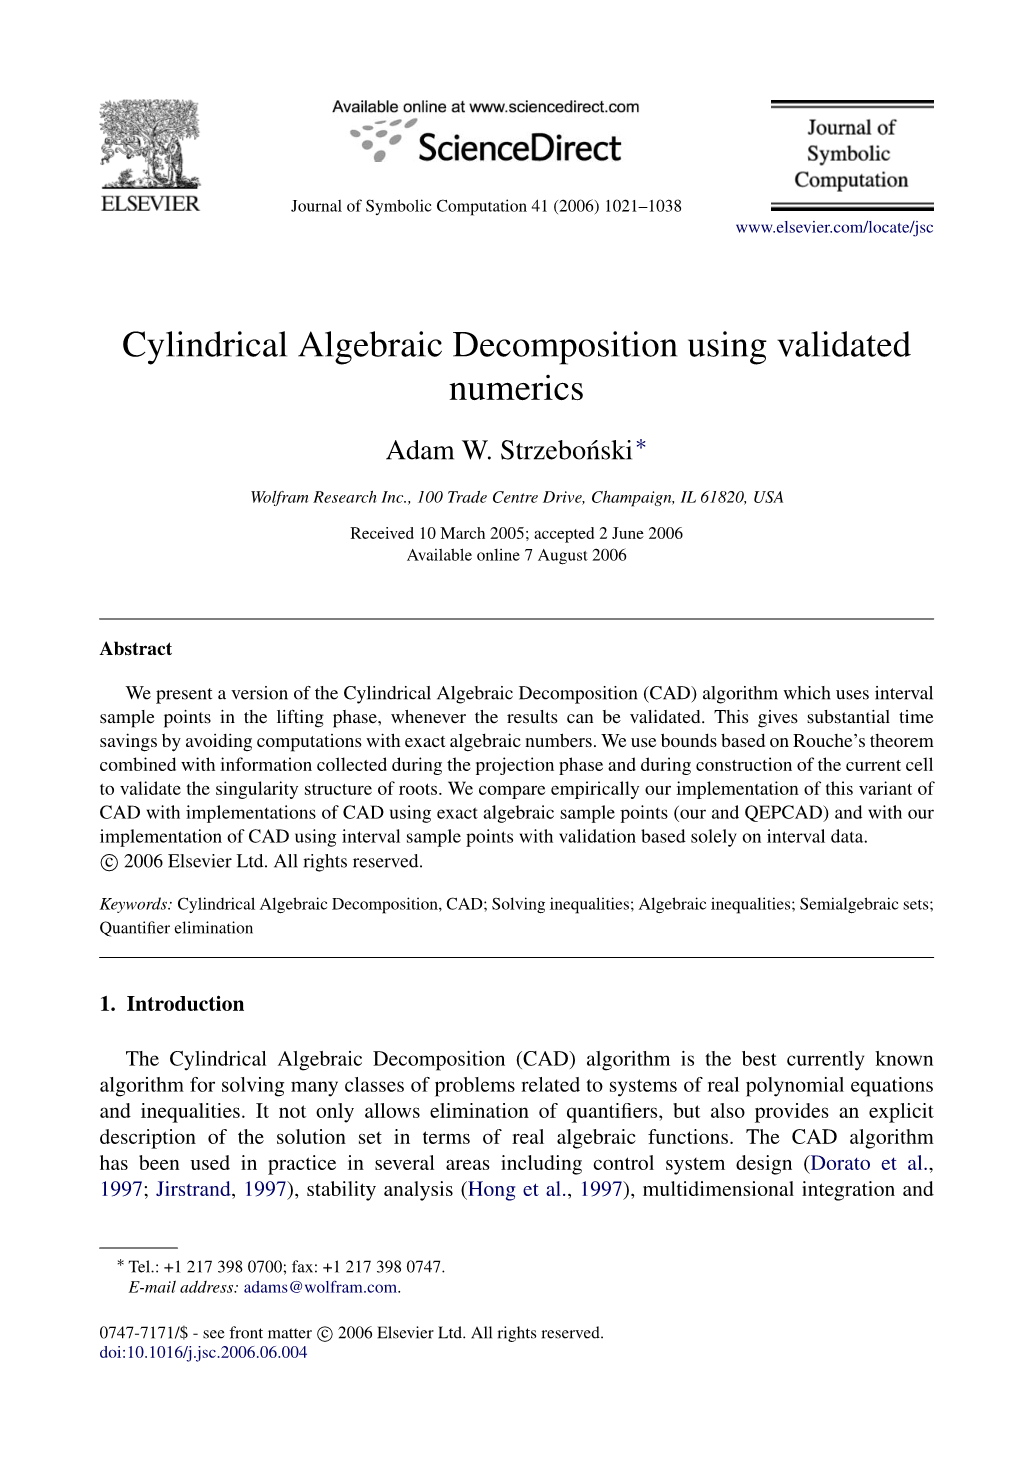 Cylindrical Algebraic Decomposition Using Validated Numerics